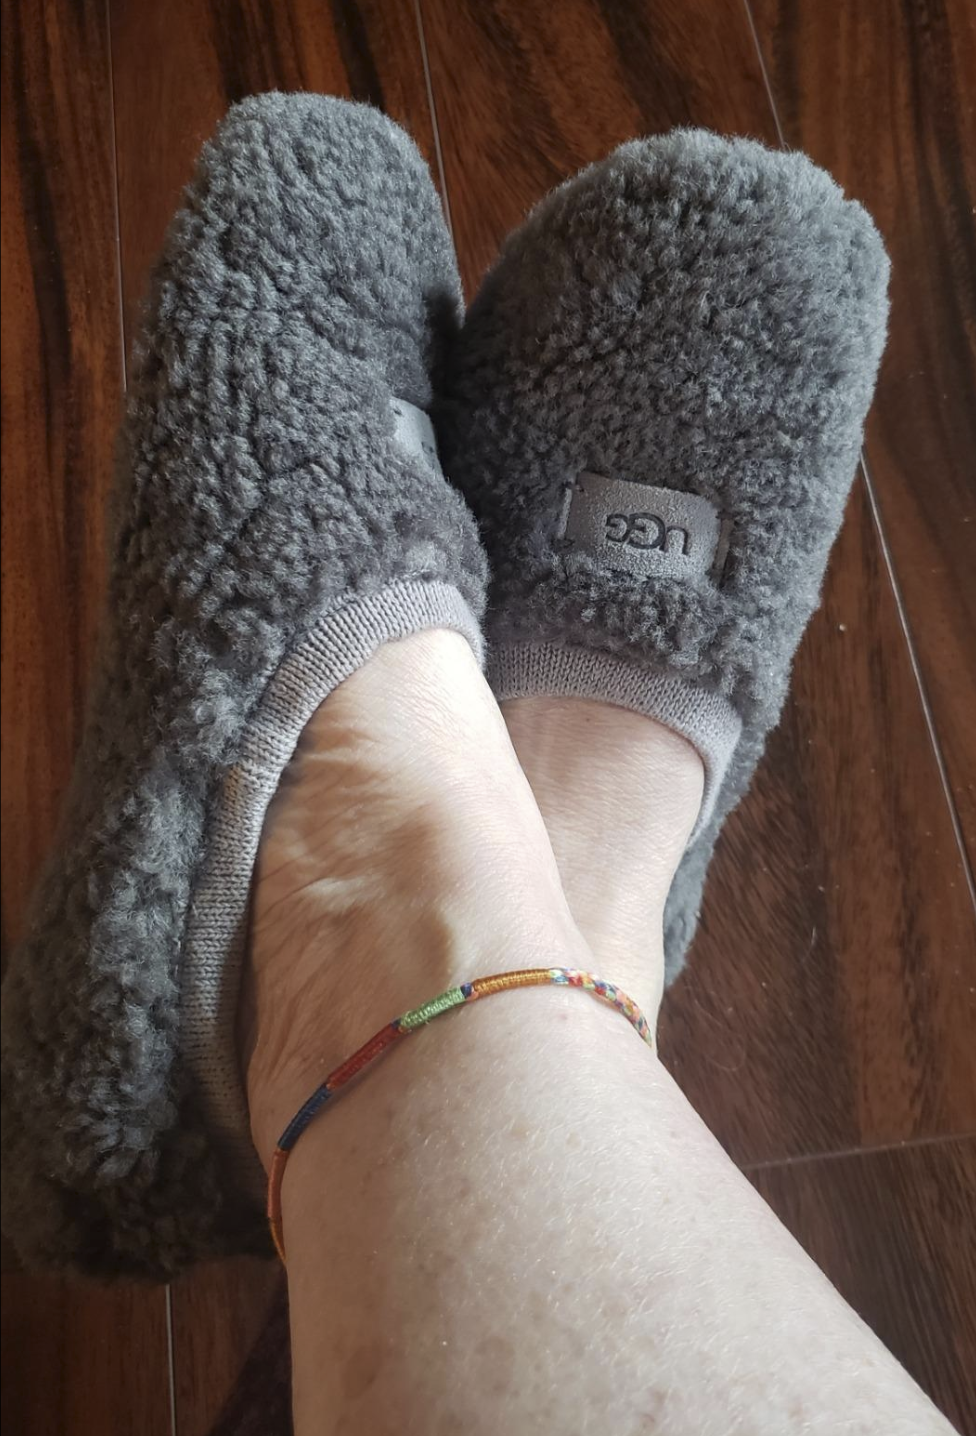 cozy feet slippers